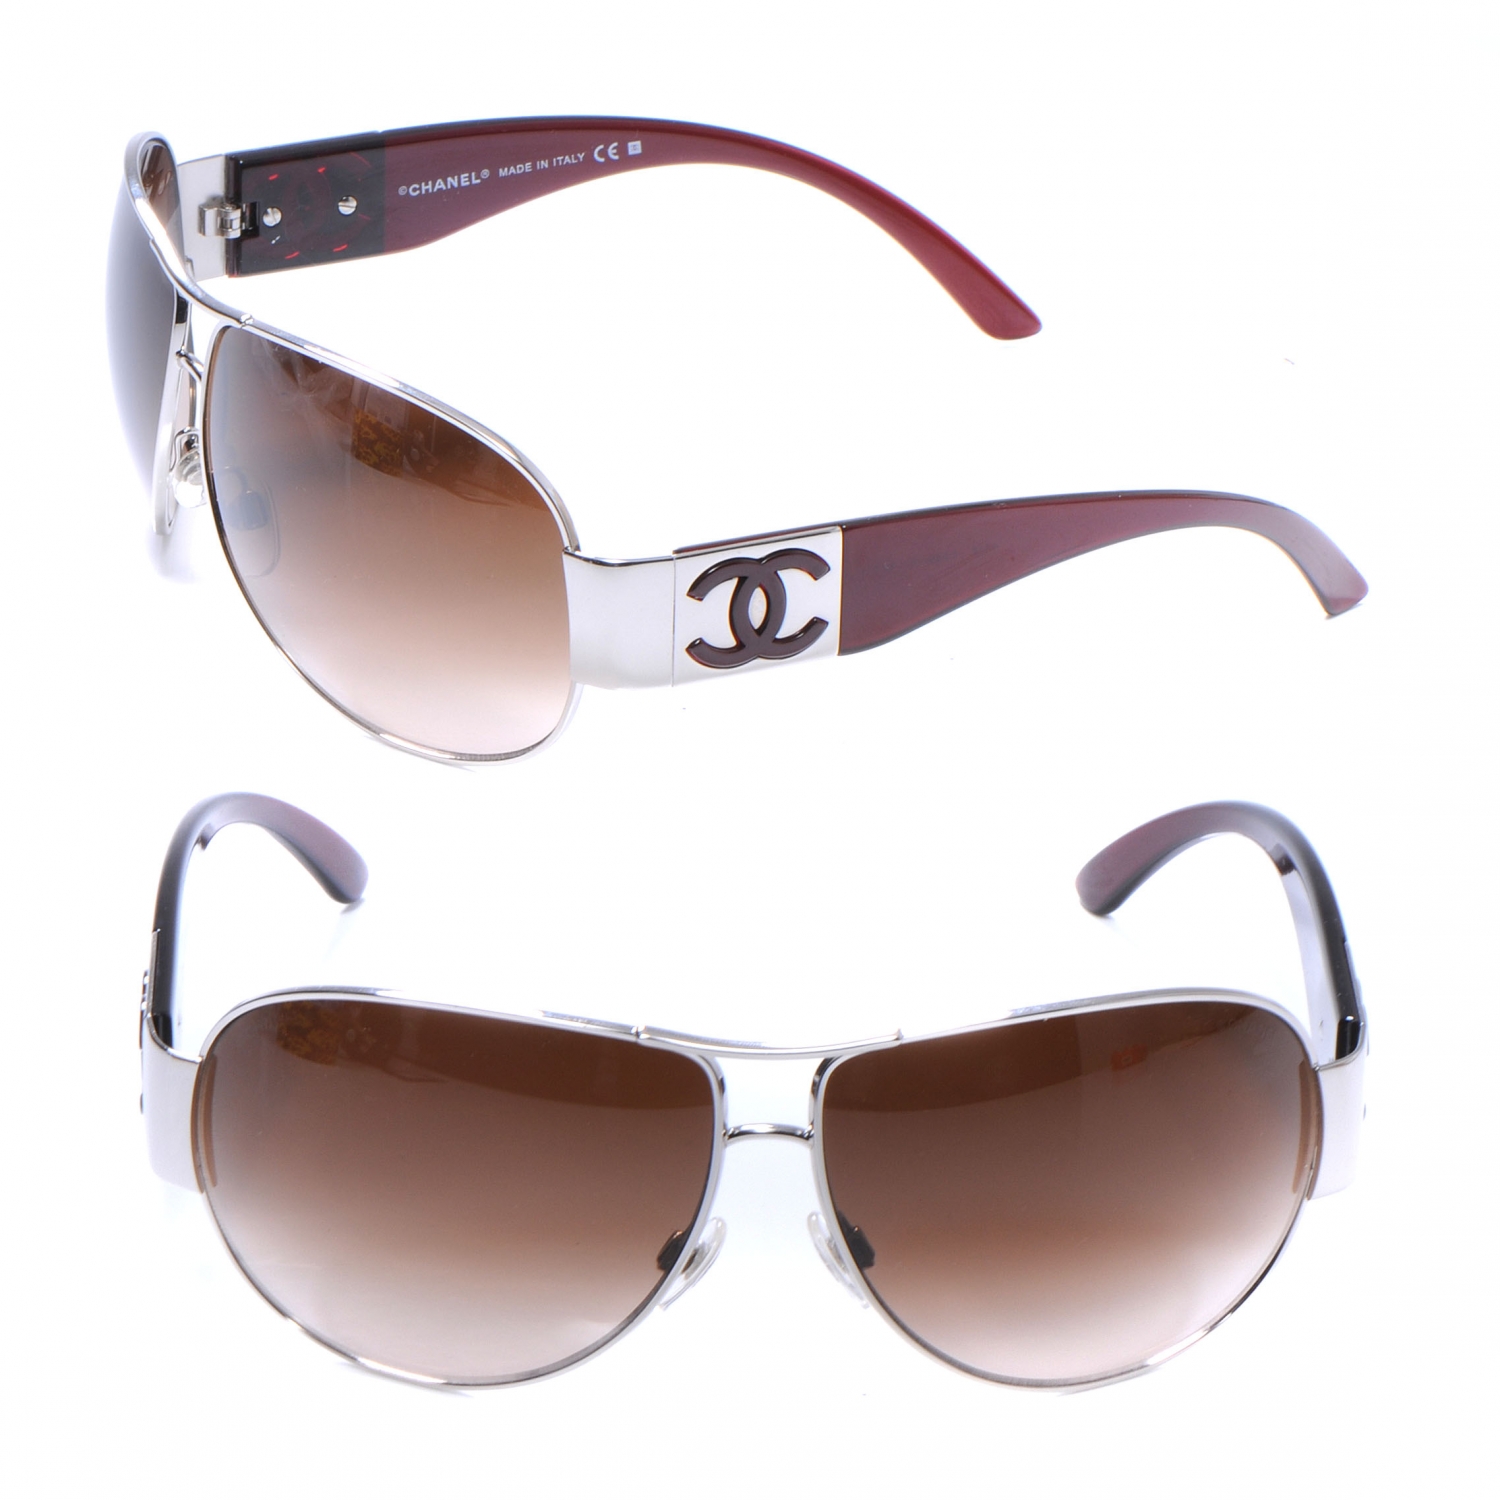 CHANEL Aviator Sunglasses 4128 Burgundy 50018 | FASHIONPHILE